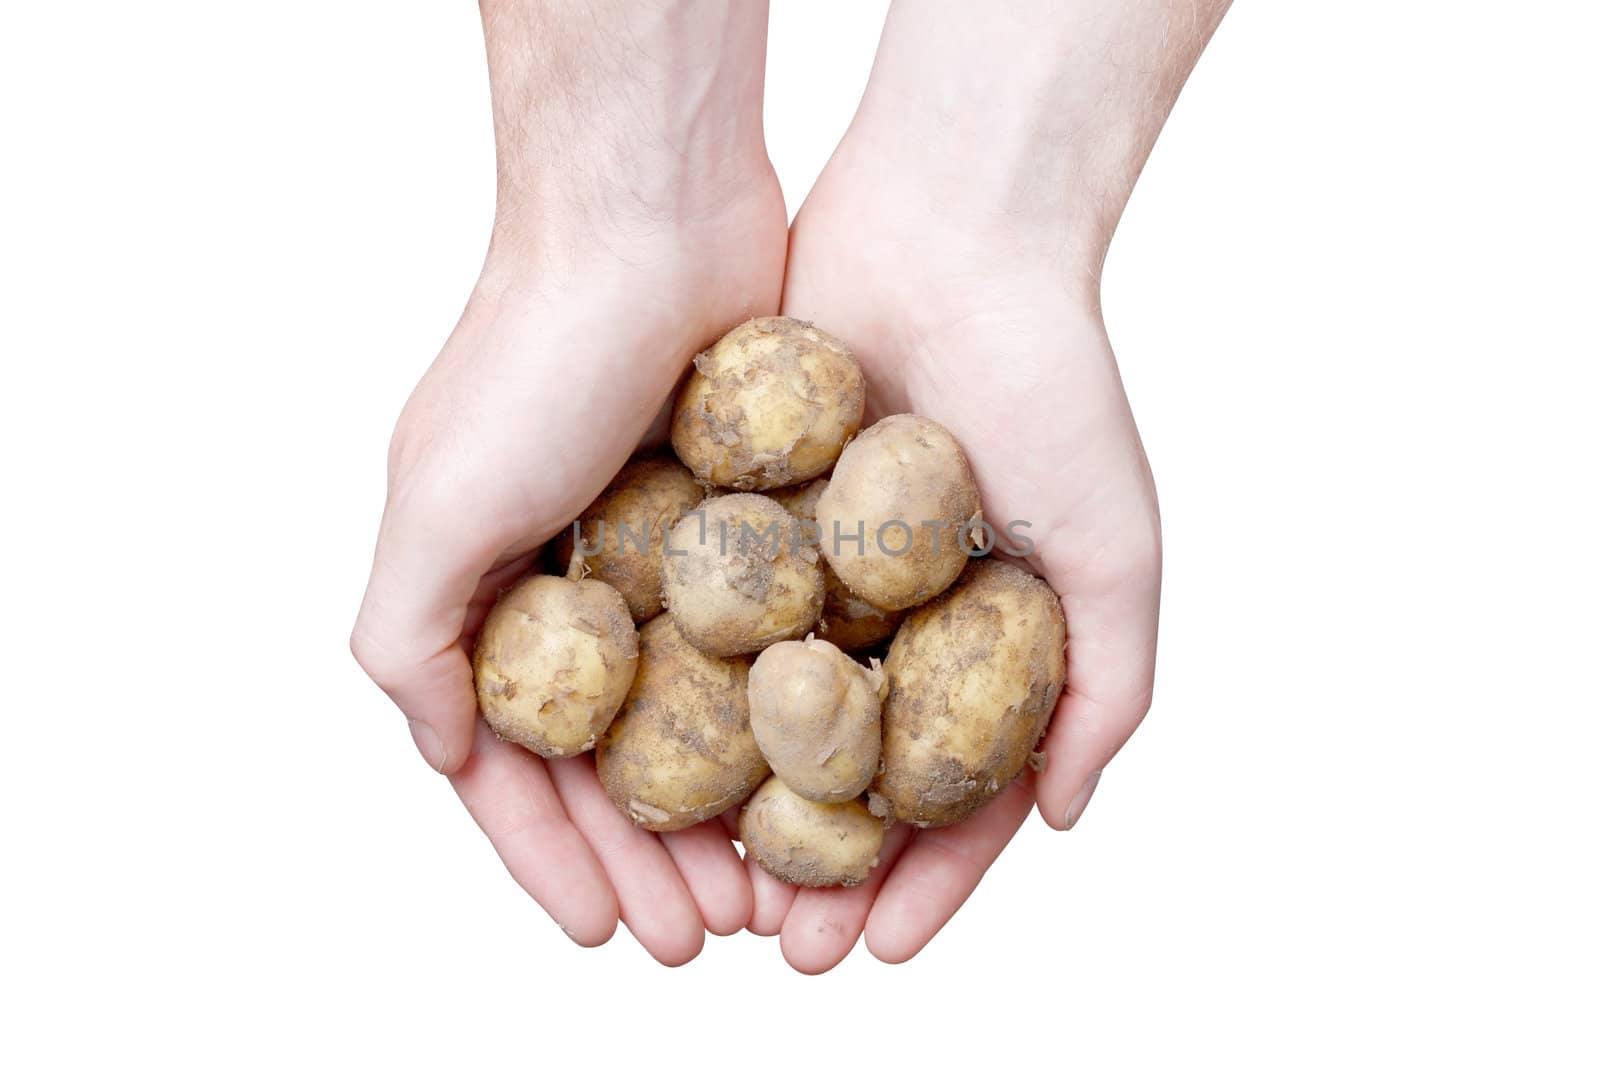 Hands holding potato by leeser